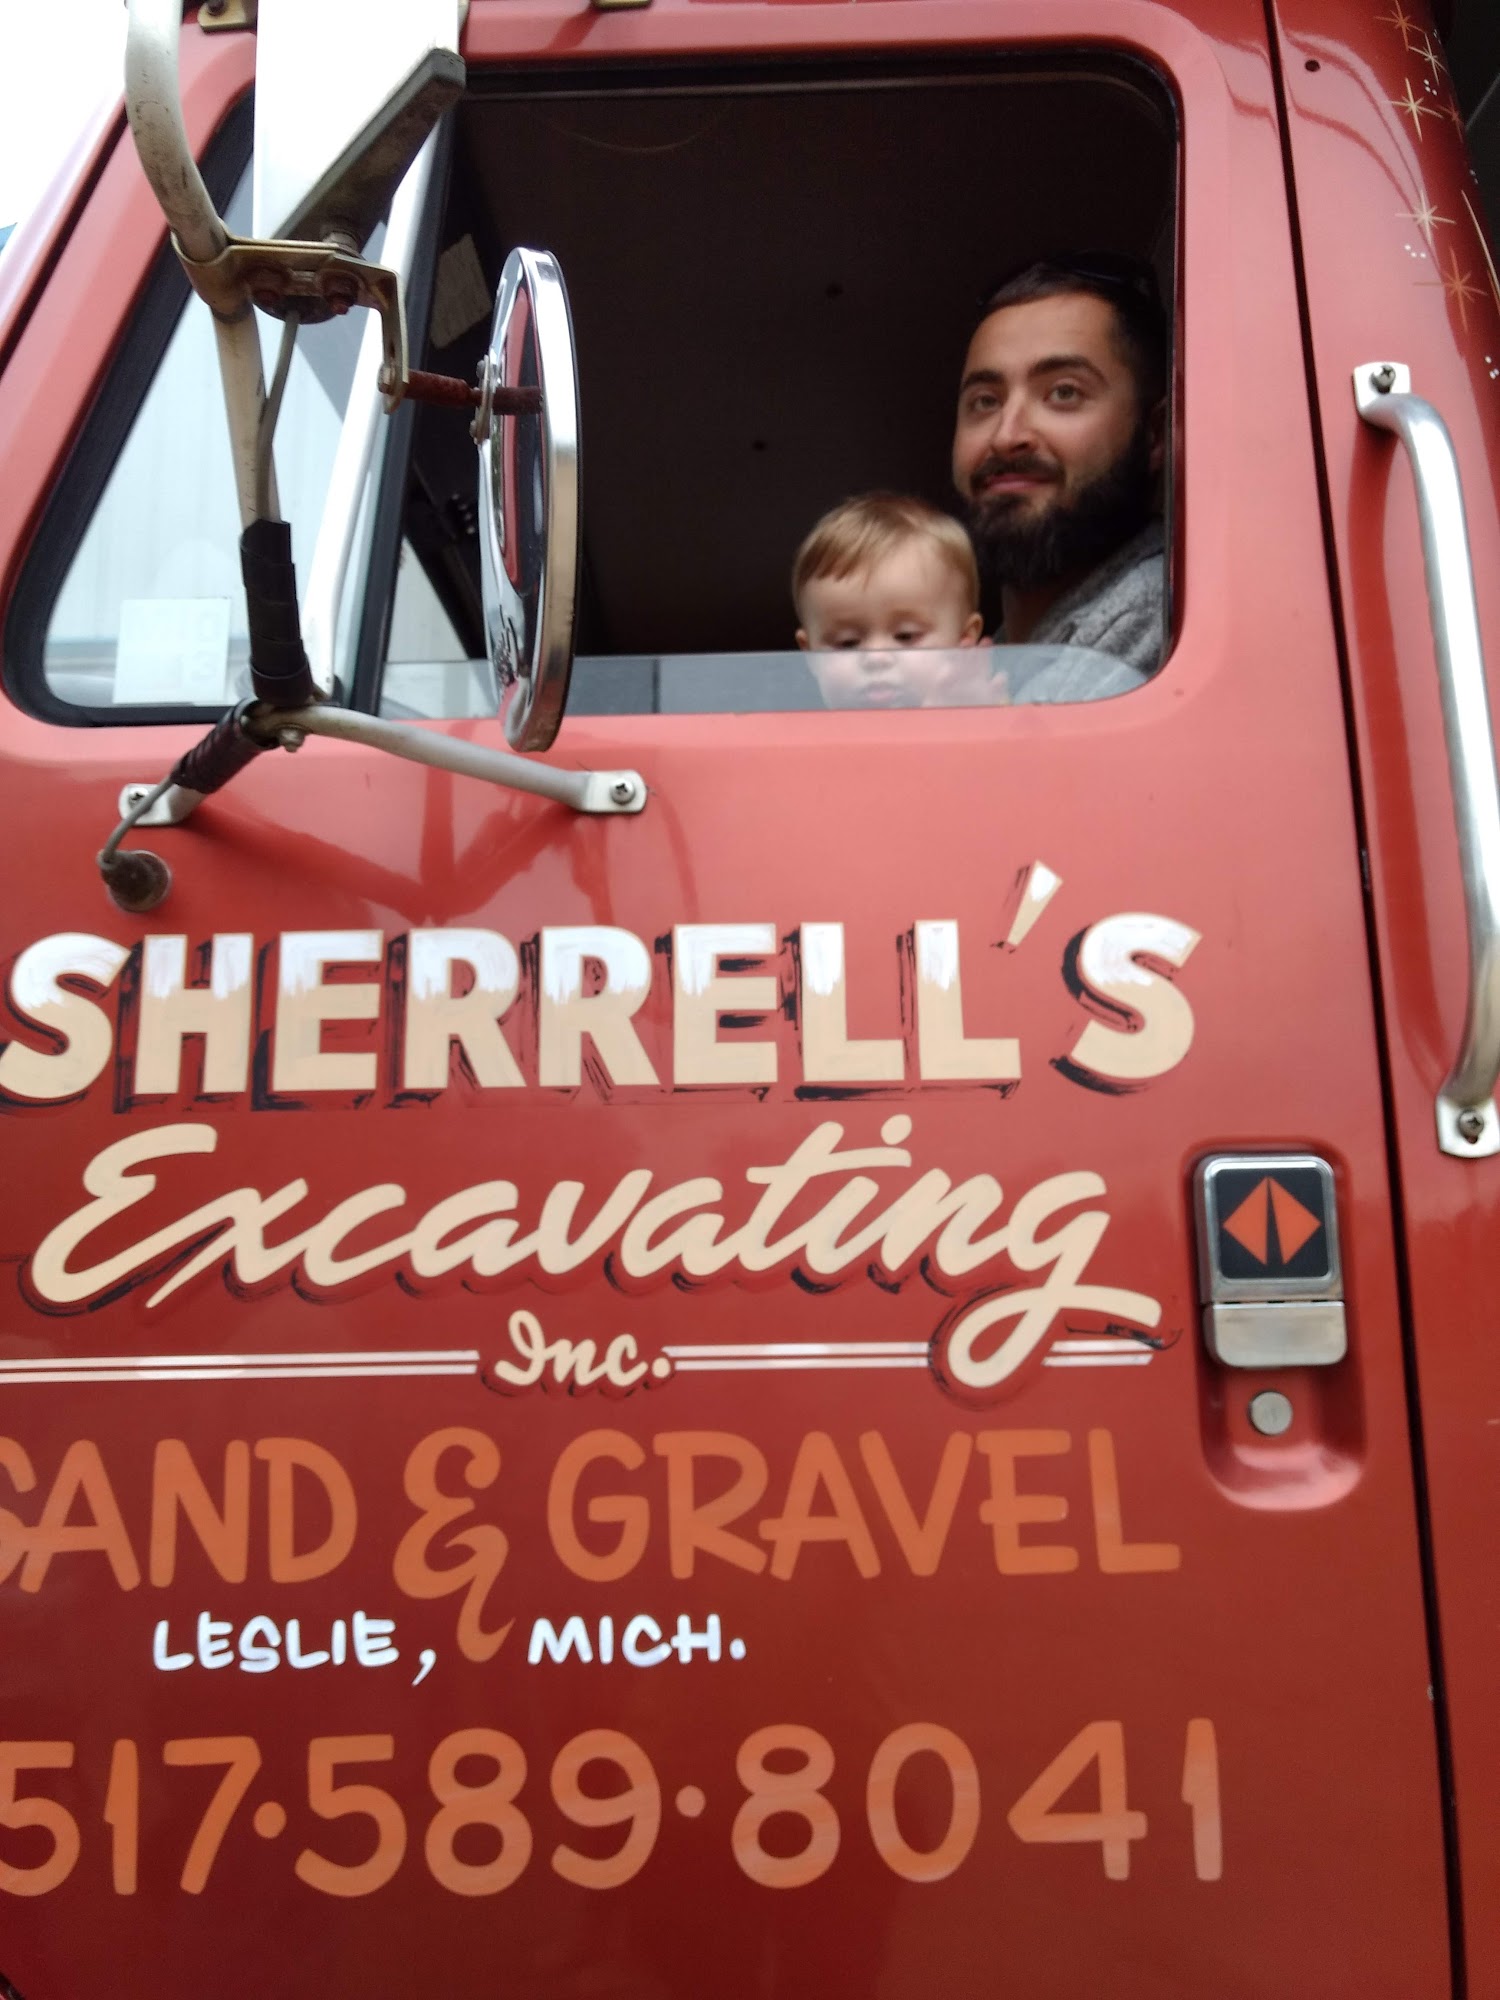 Sherrell's Excavating Inc. 4335 Byrum Rd, Onondaga Michigan 49264